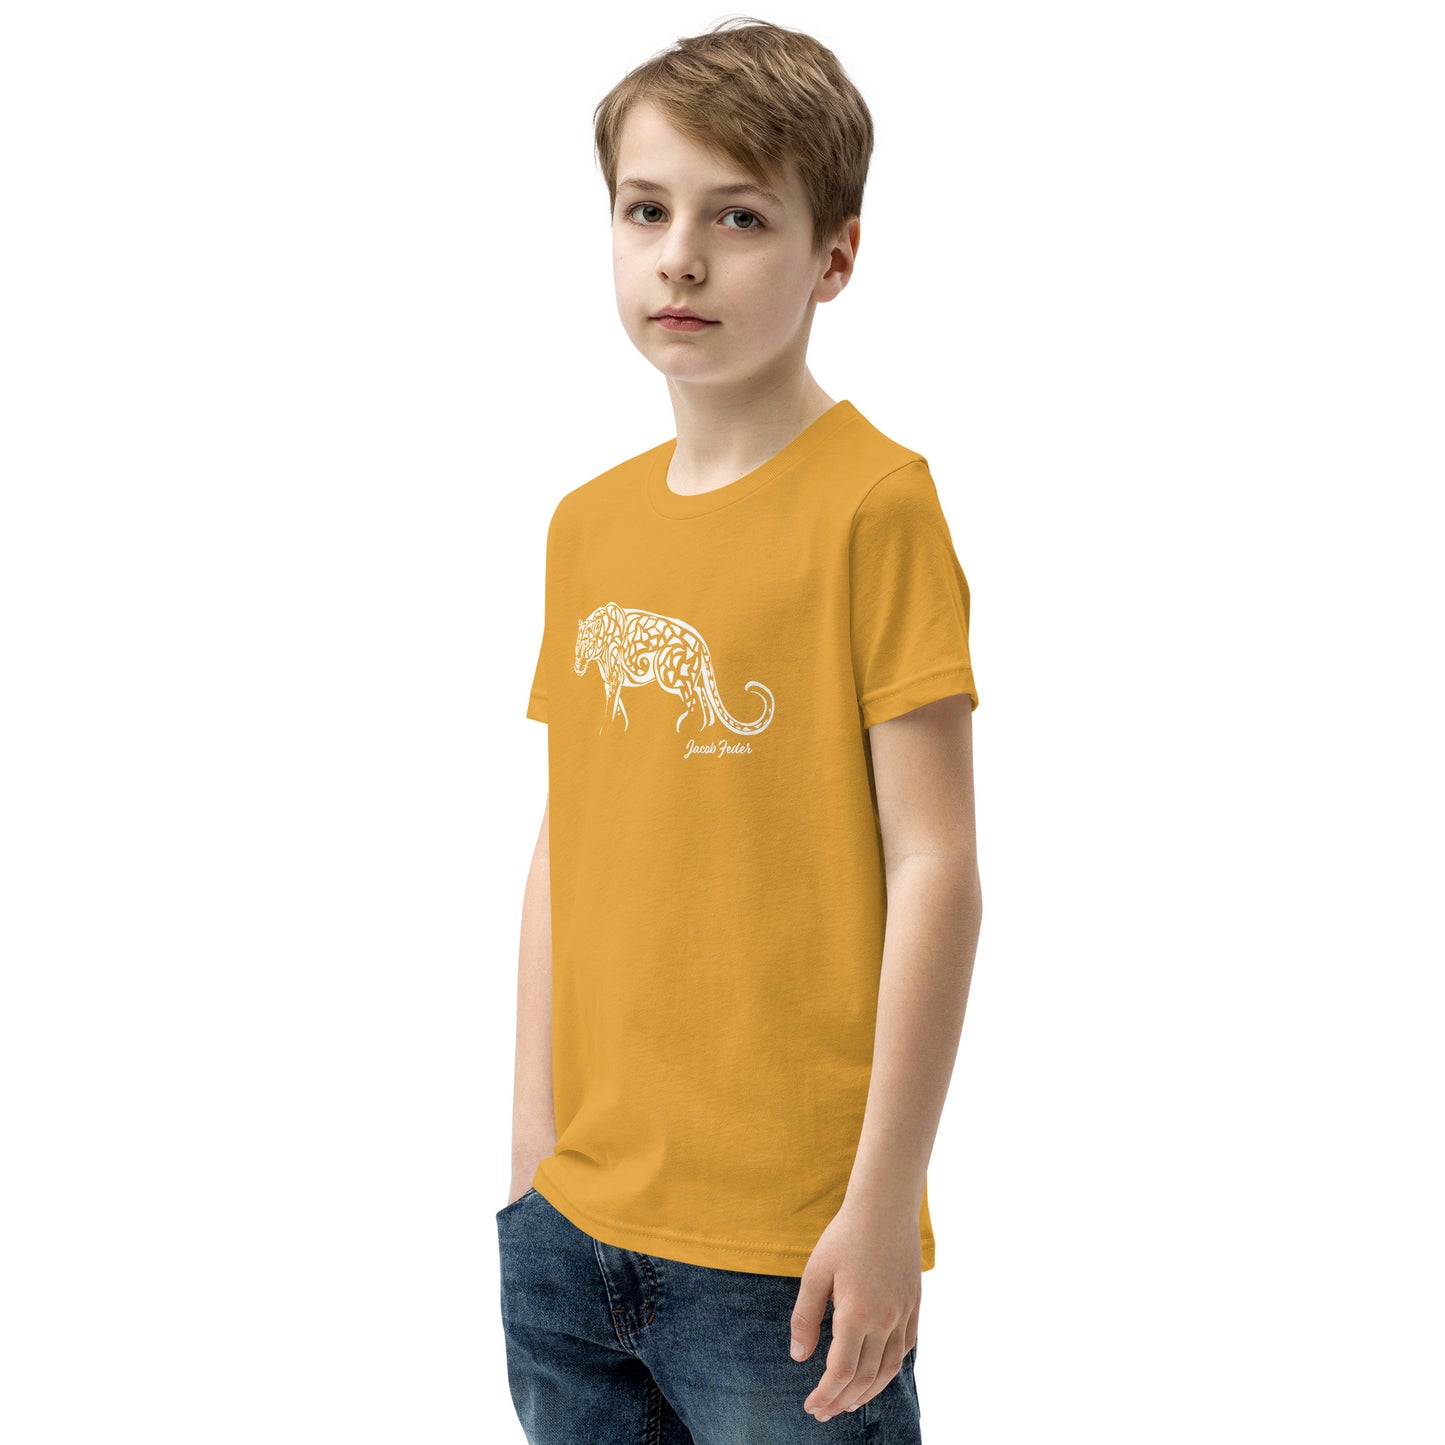 Jacob Feder Youth T-Shirt